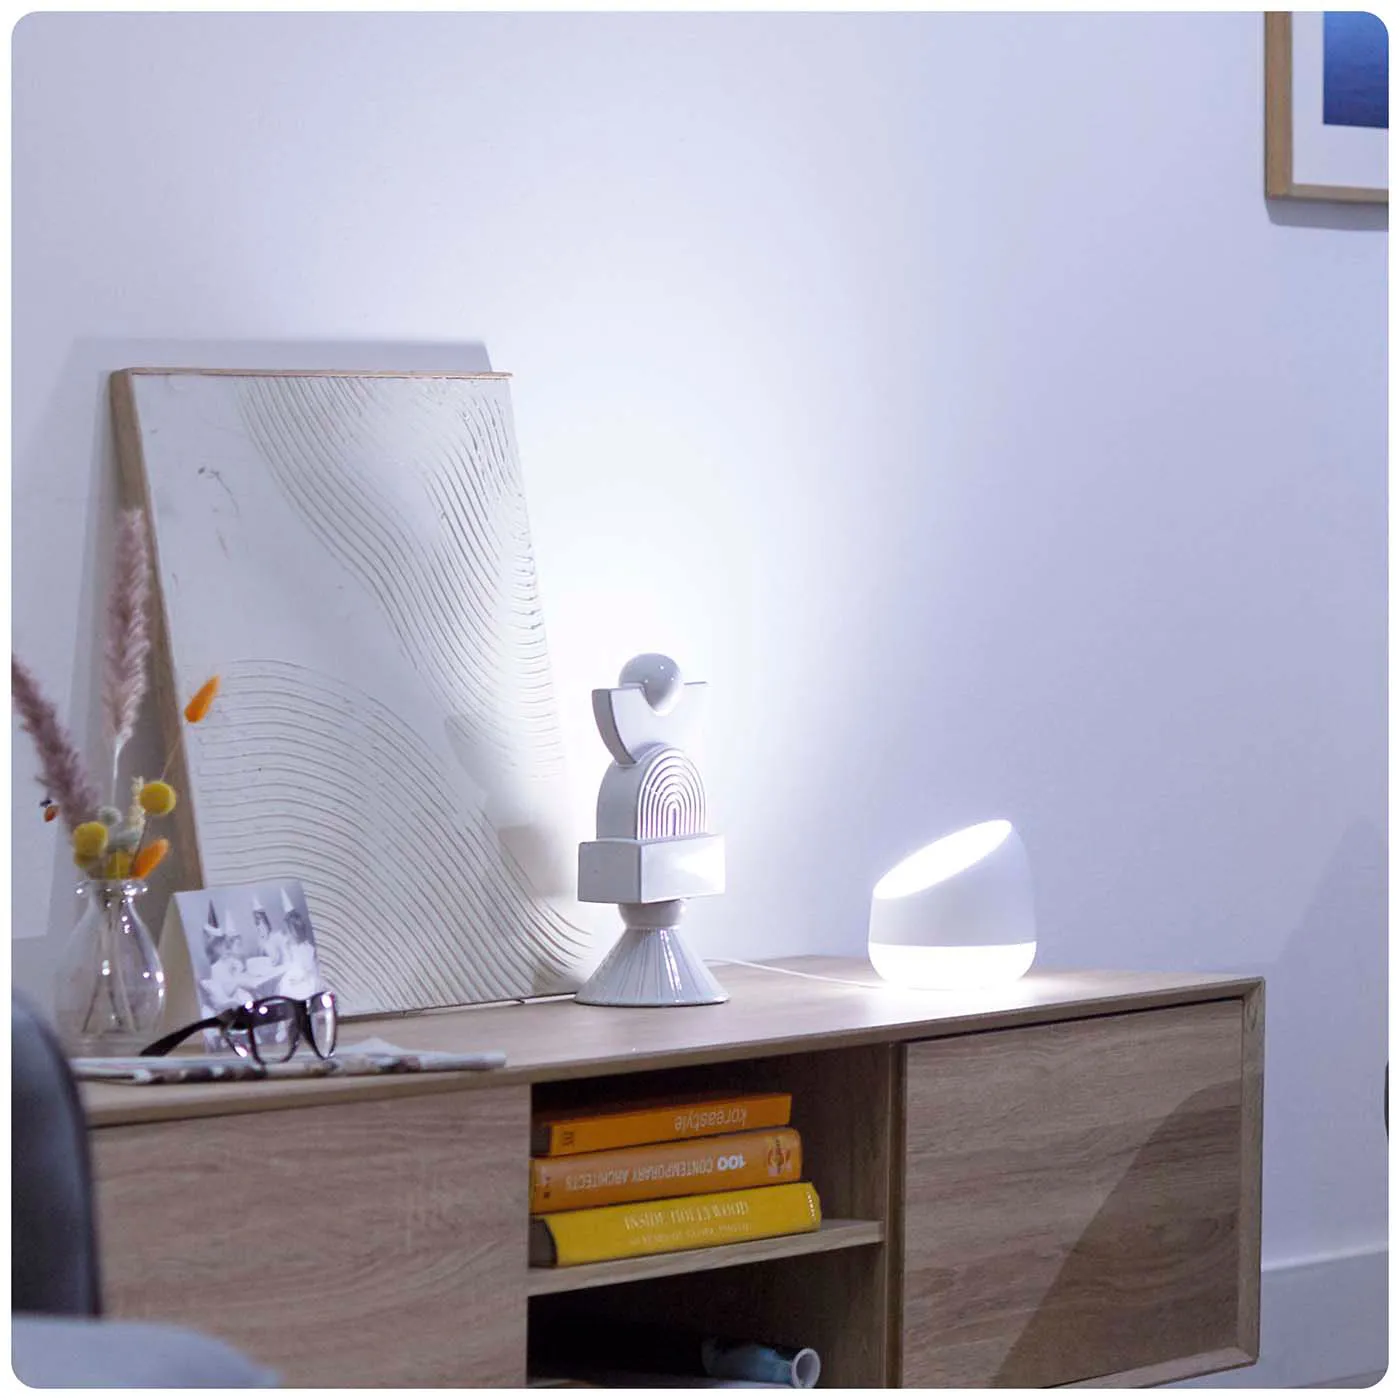 Lámpara de mesa WIZ LED Squire WiFI + BLE RGB doble display